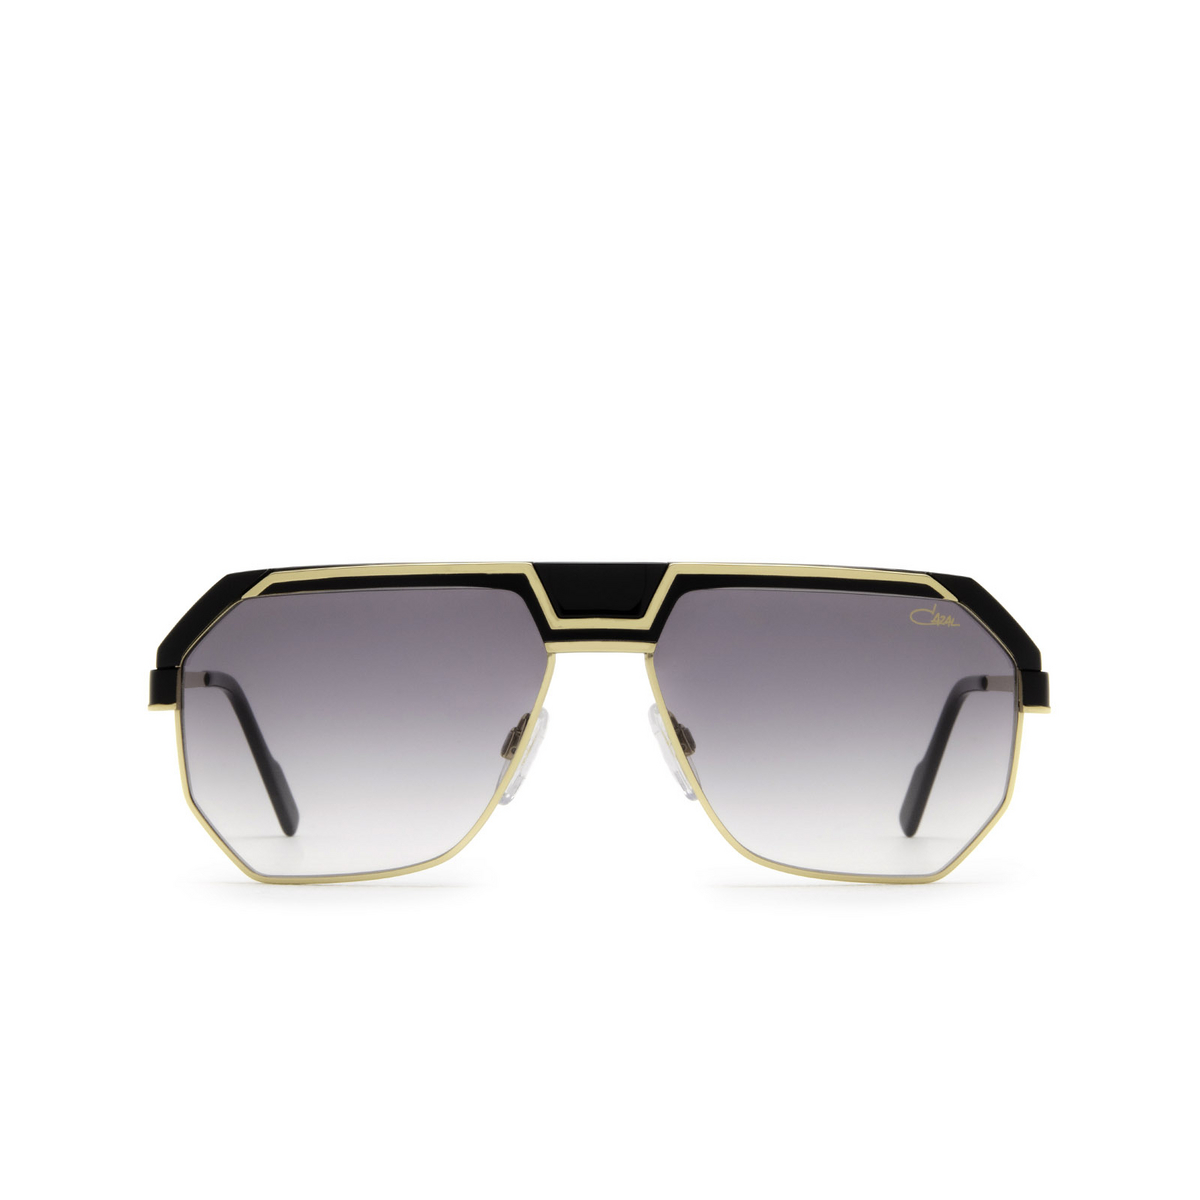 Cazal 790/3 Sunglasses 001 Black - Gold - front view